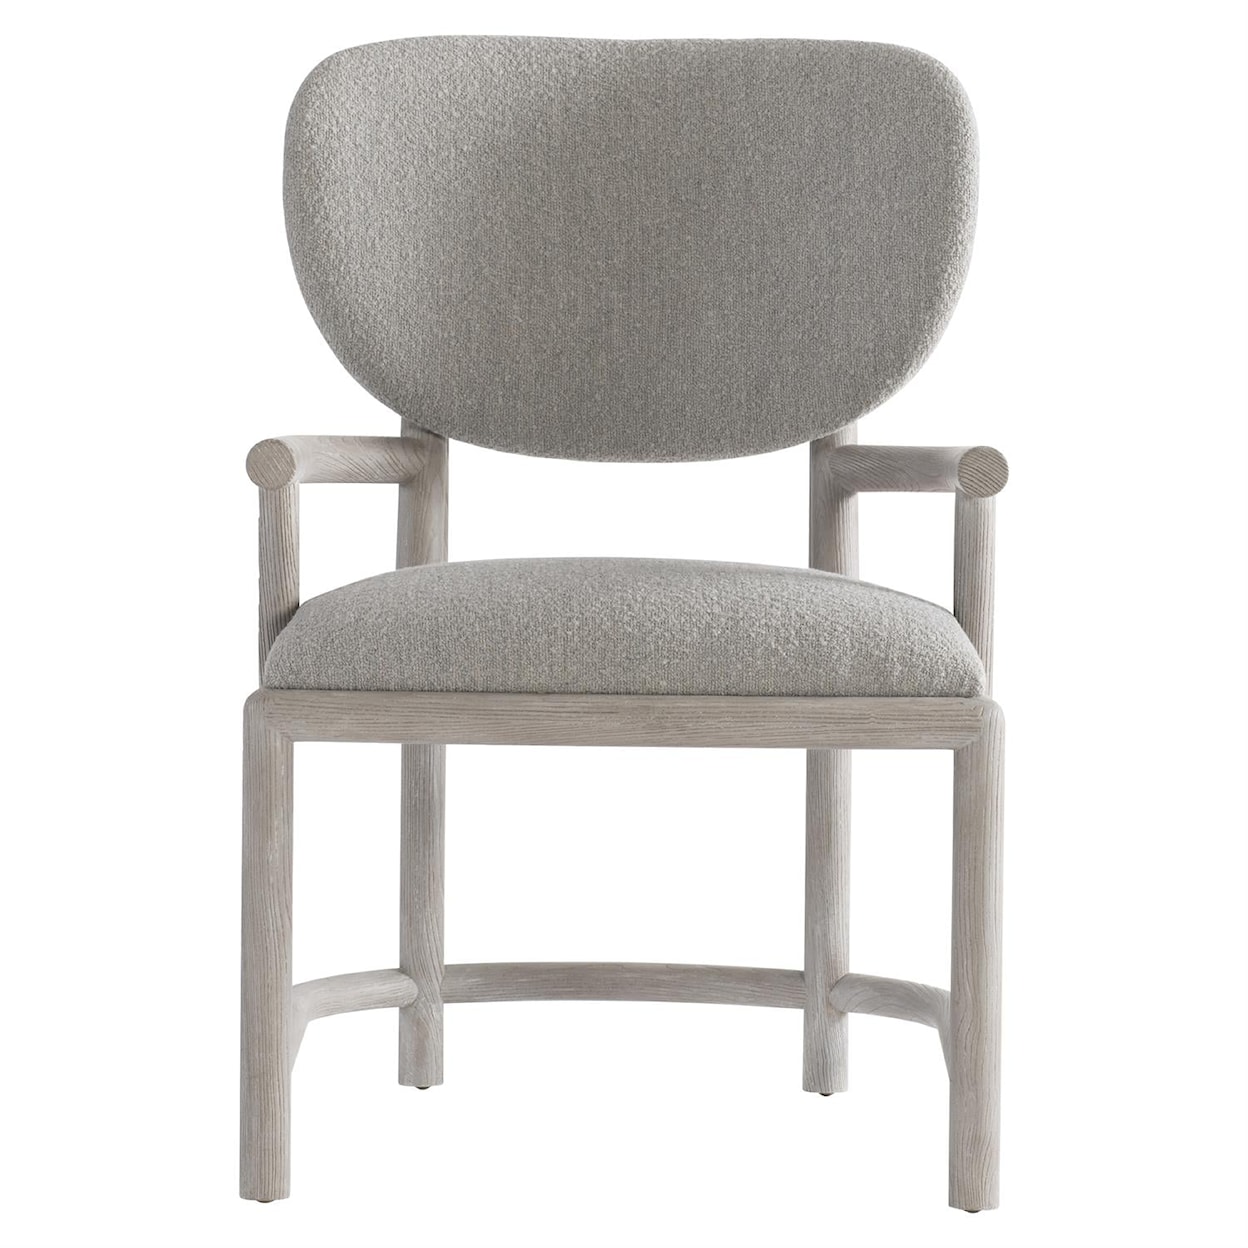 Bernhardt Trianon Customizable Arm Chair